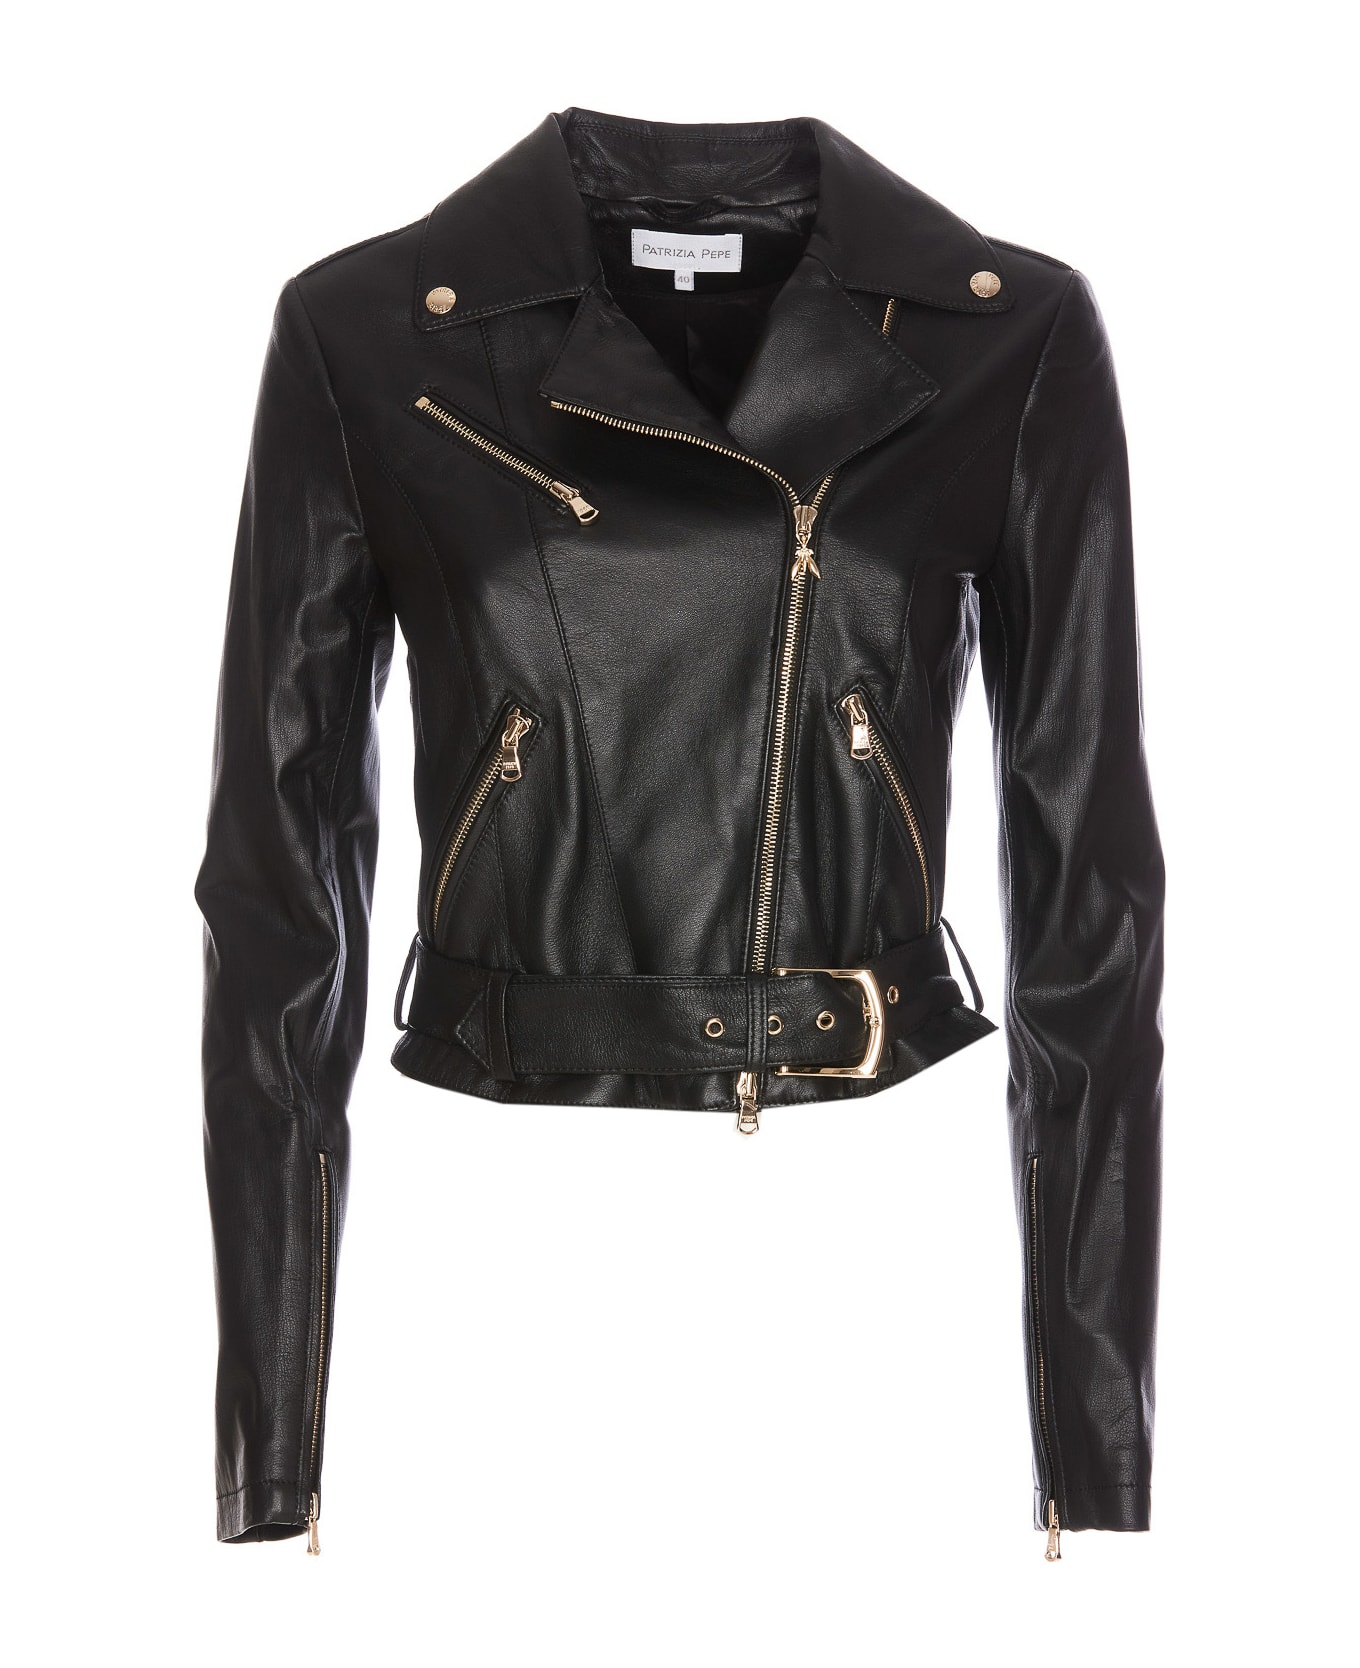 Patrizia Pepe Leather Biker Jacket - Black